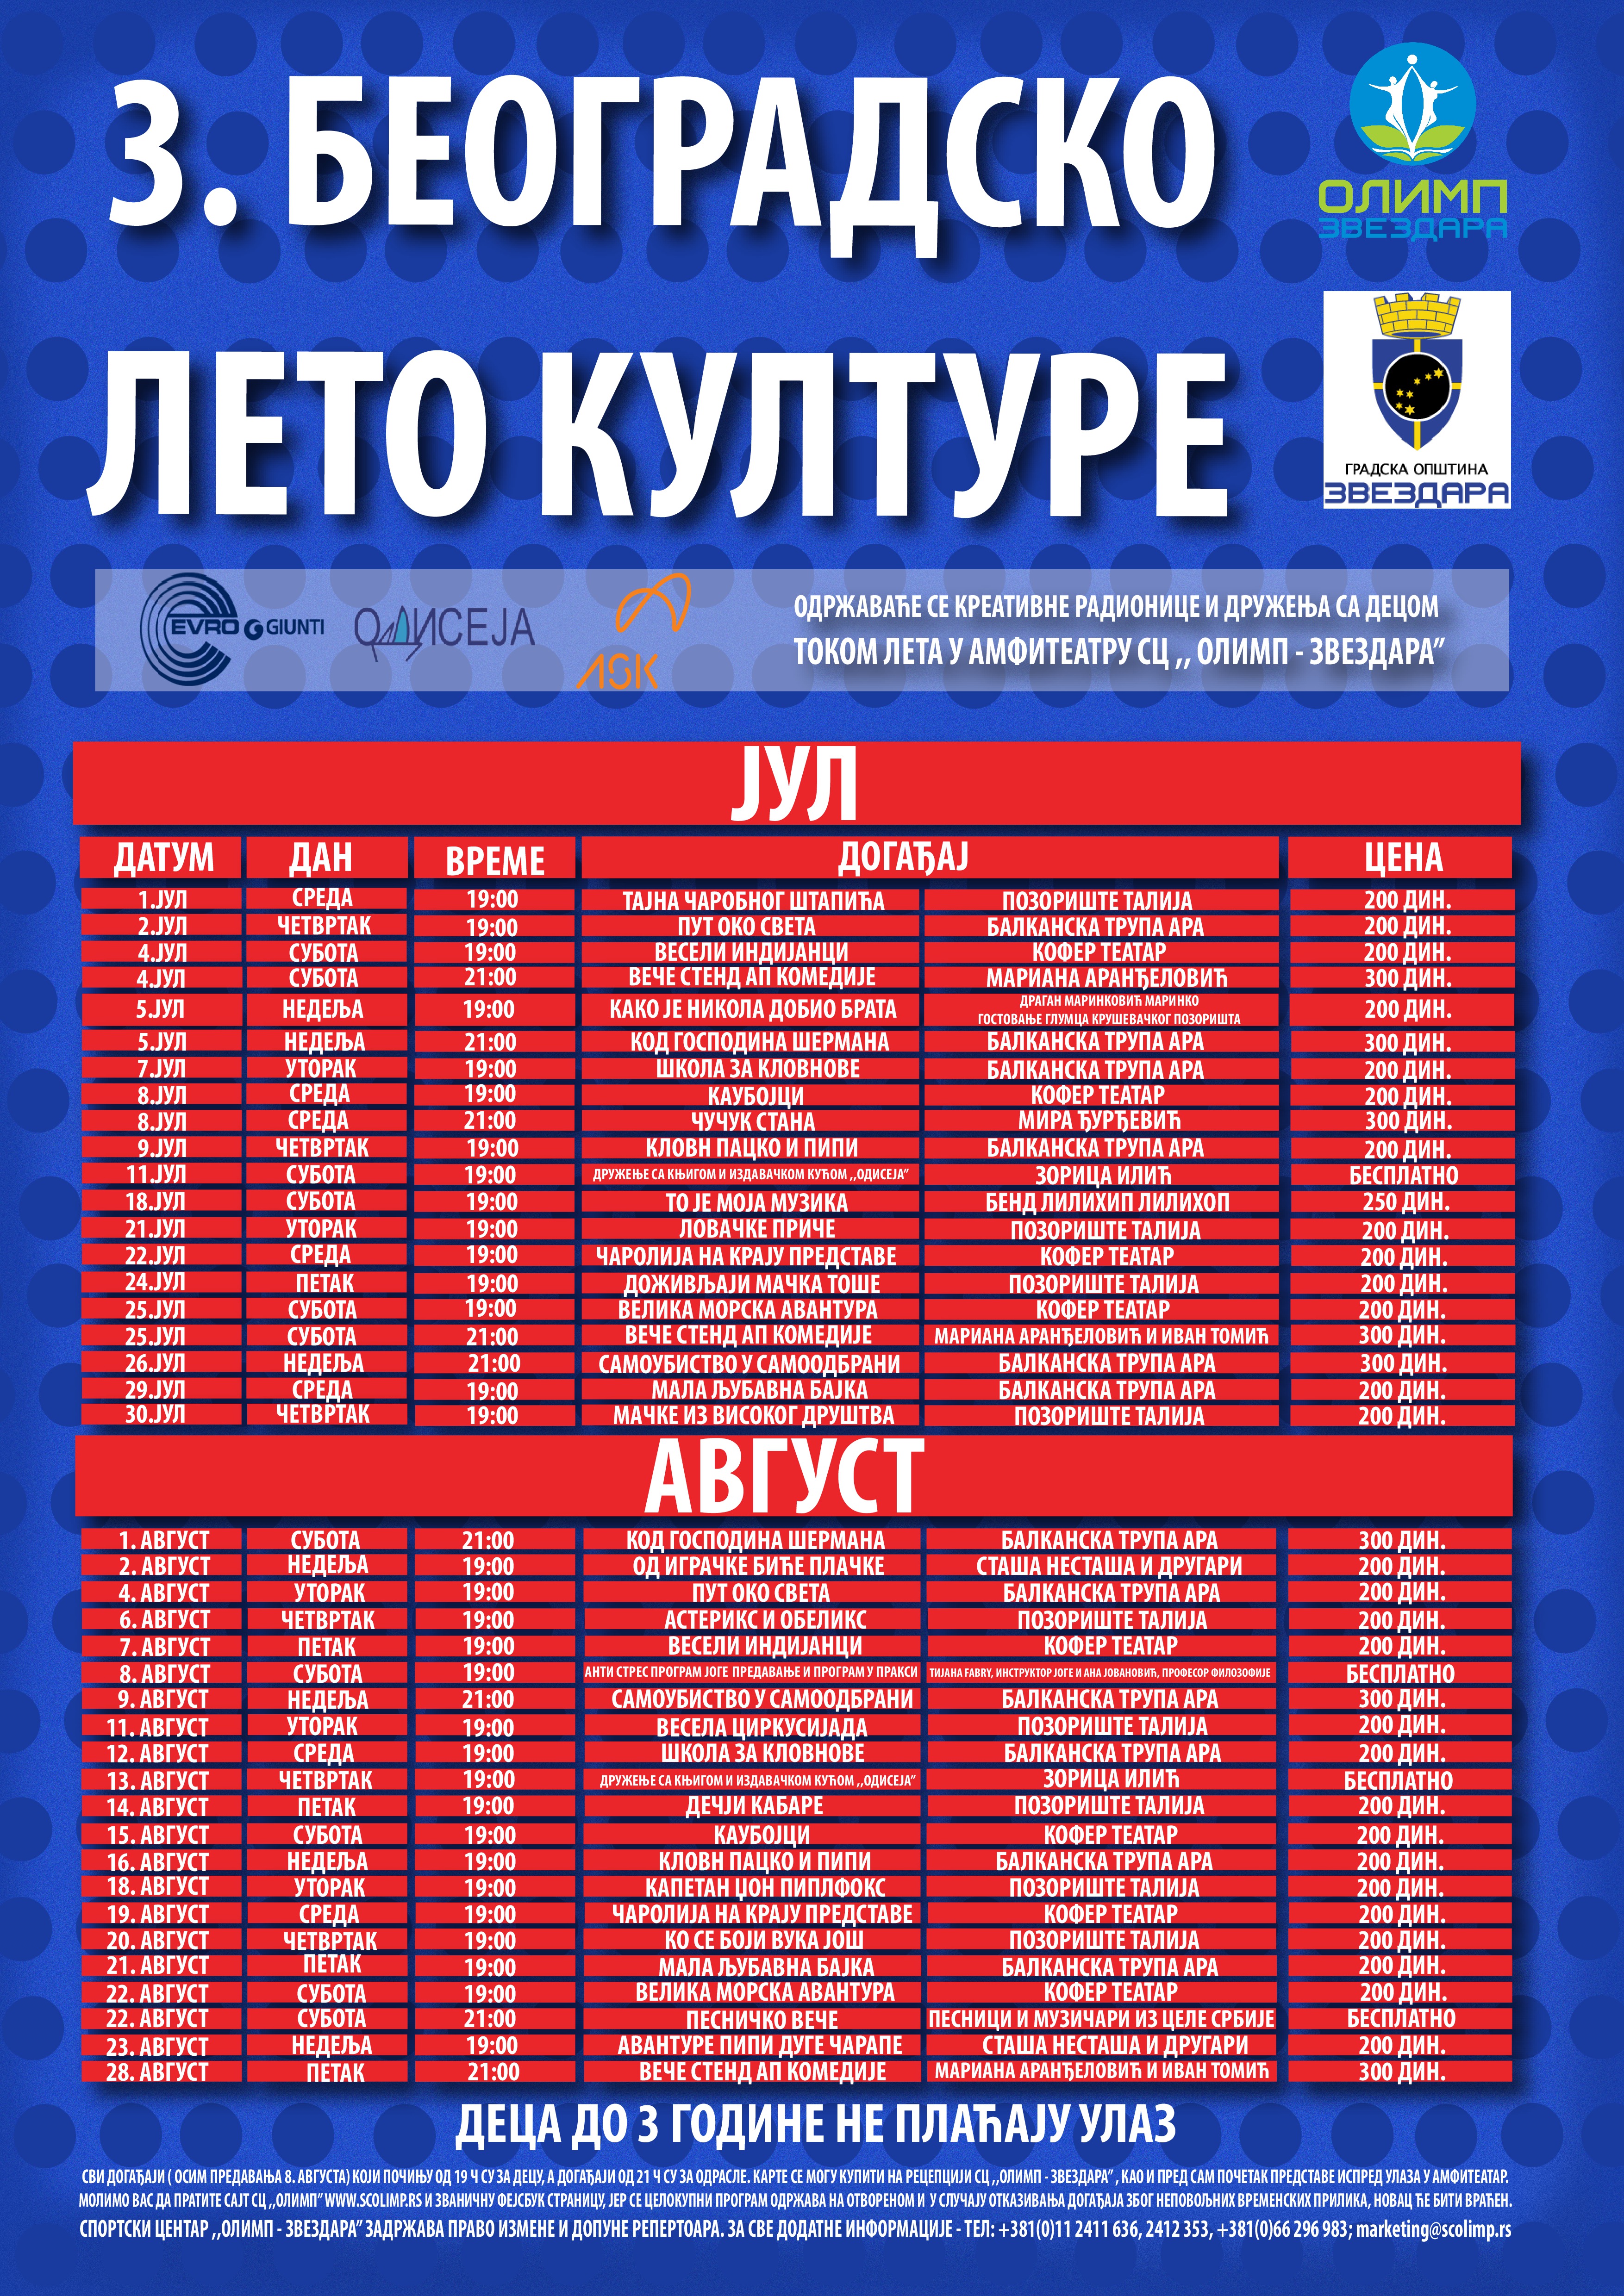 Beogradsko leto kulture 2015 - program